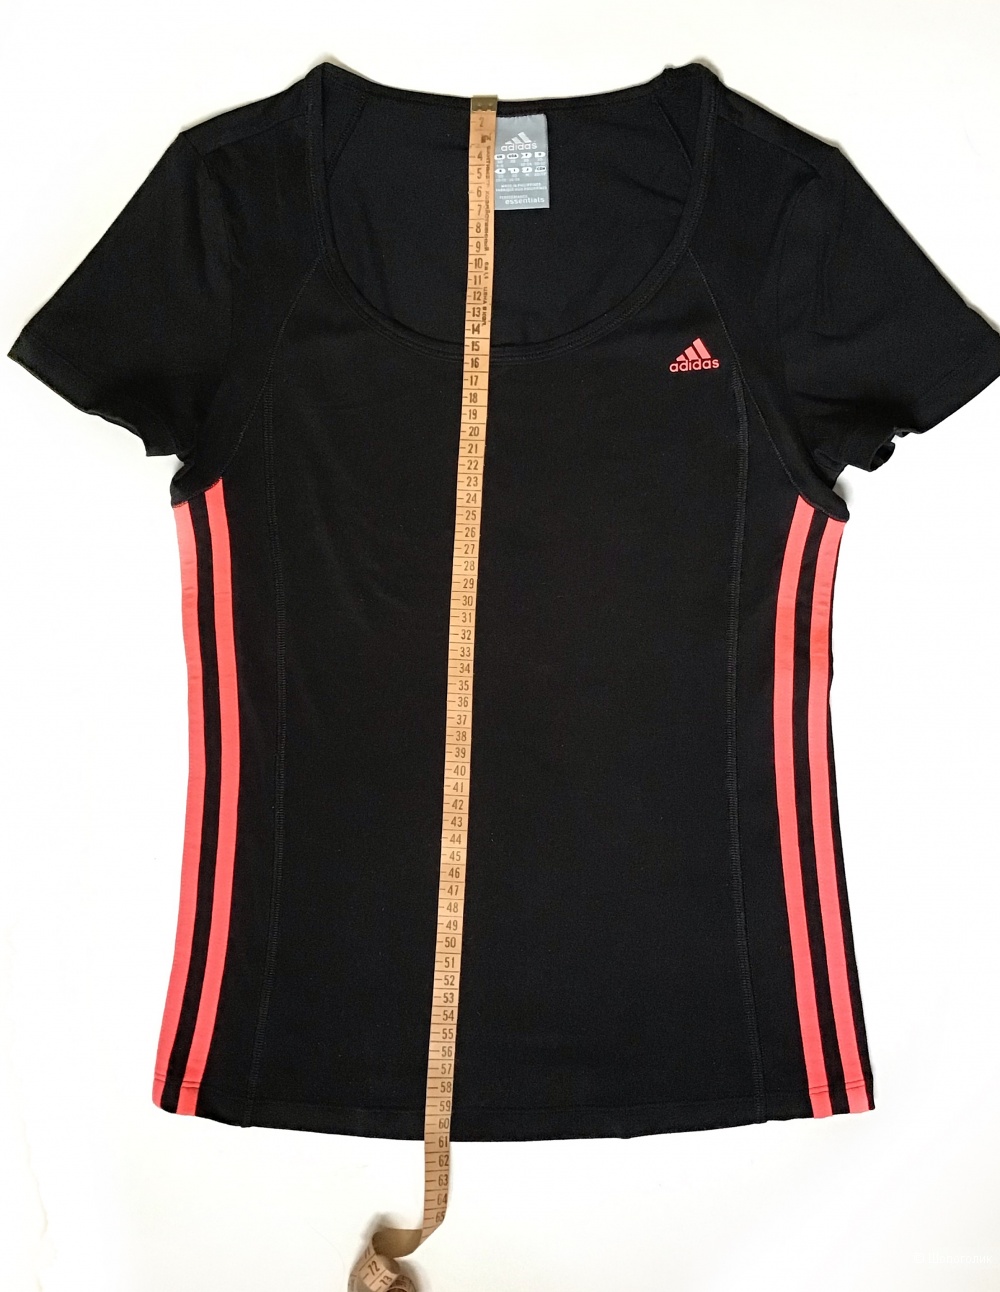 Спортивная футболка Adidas размер XS